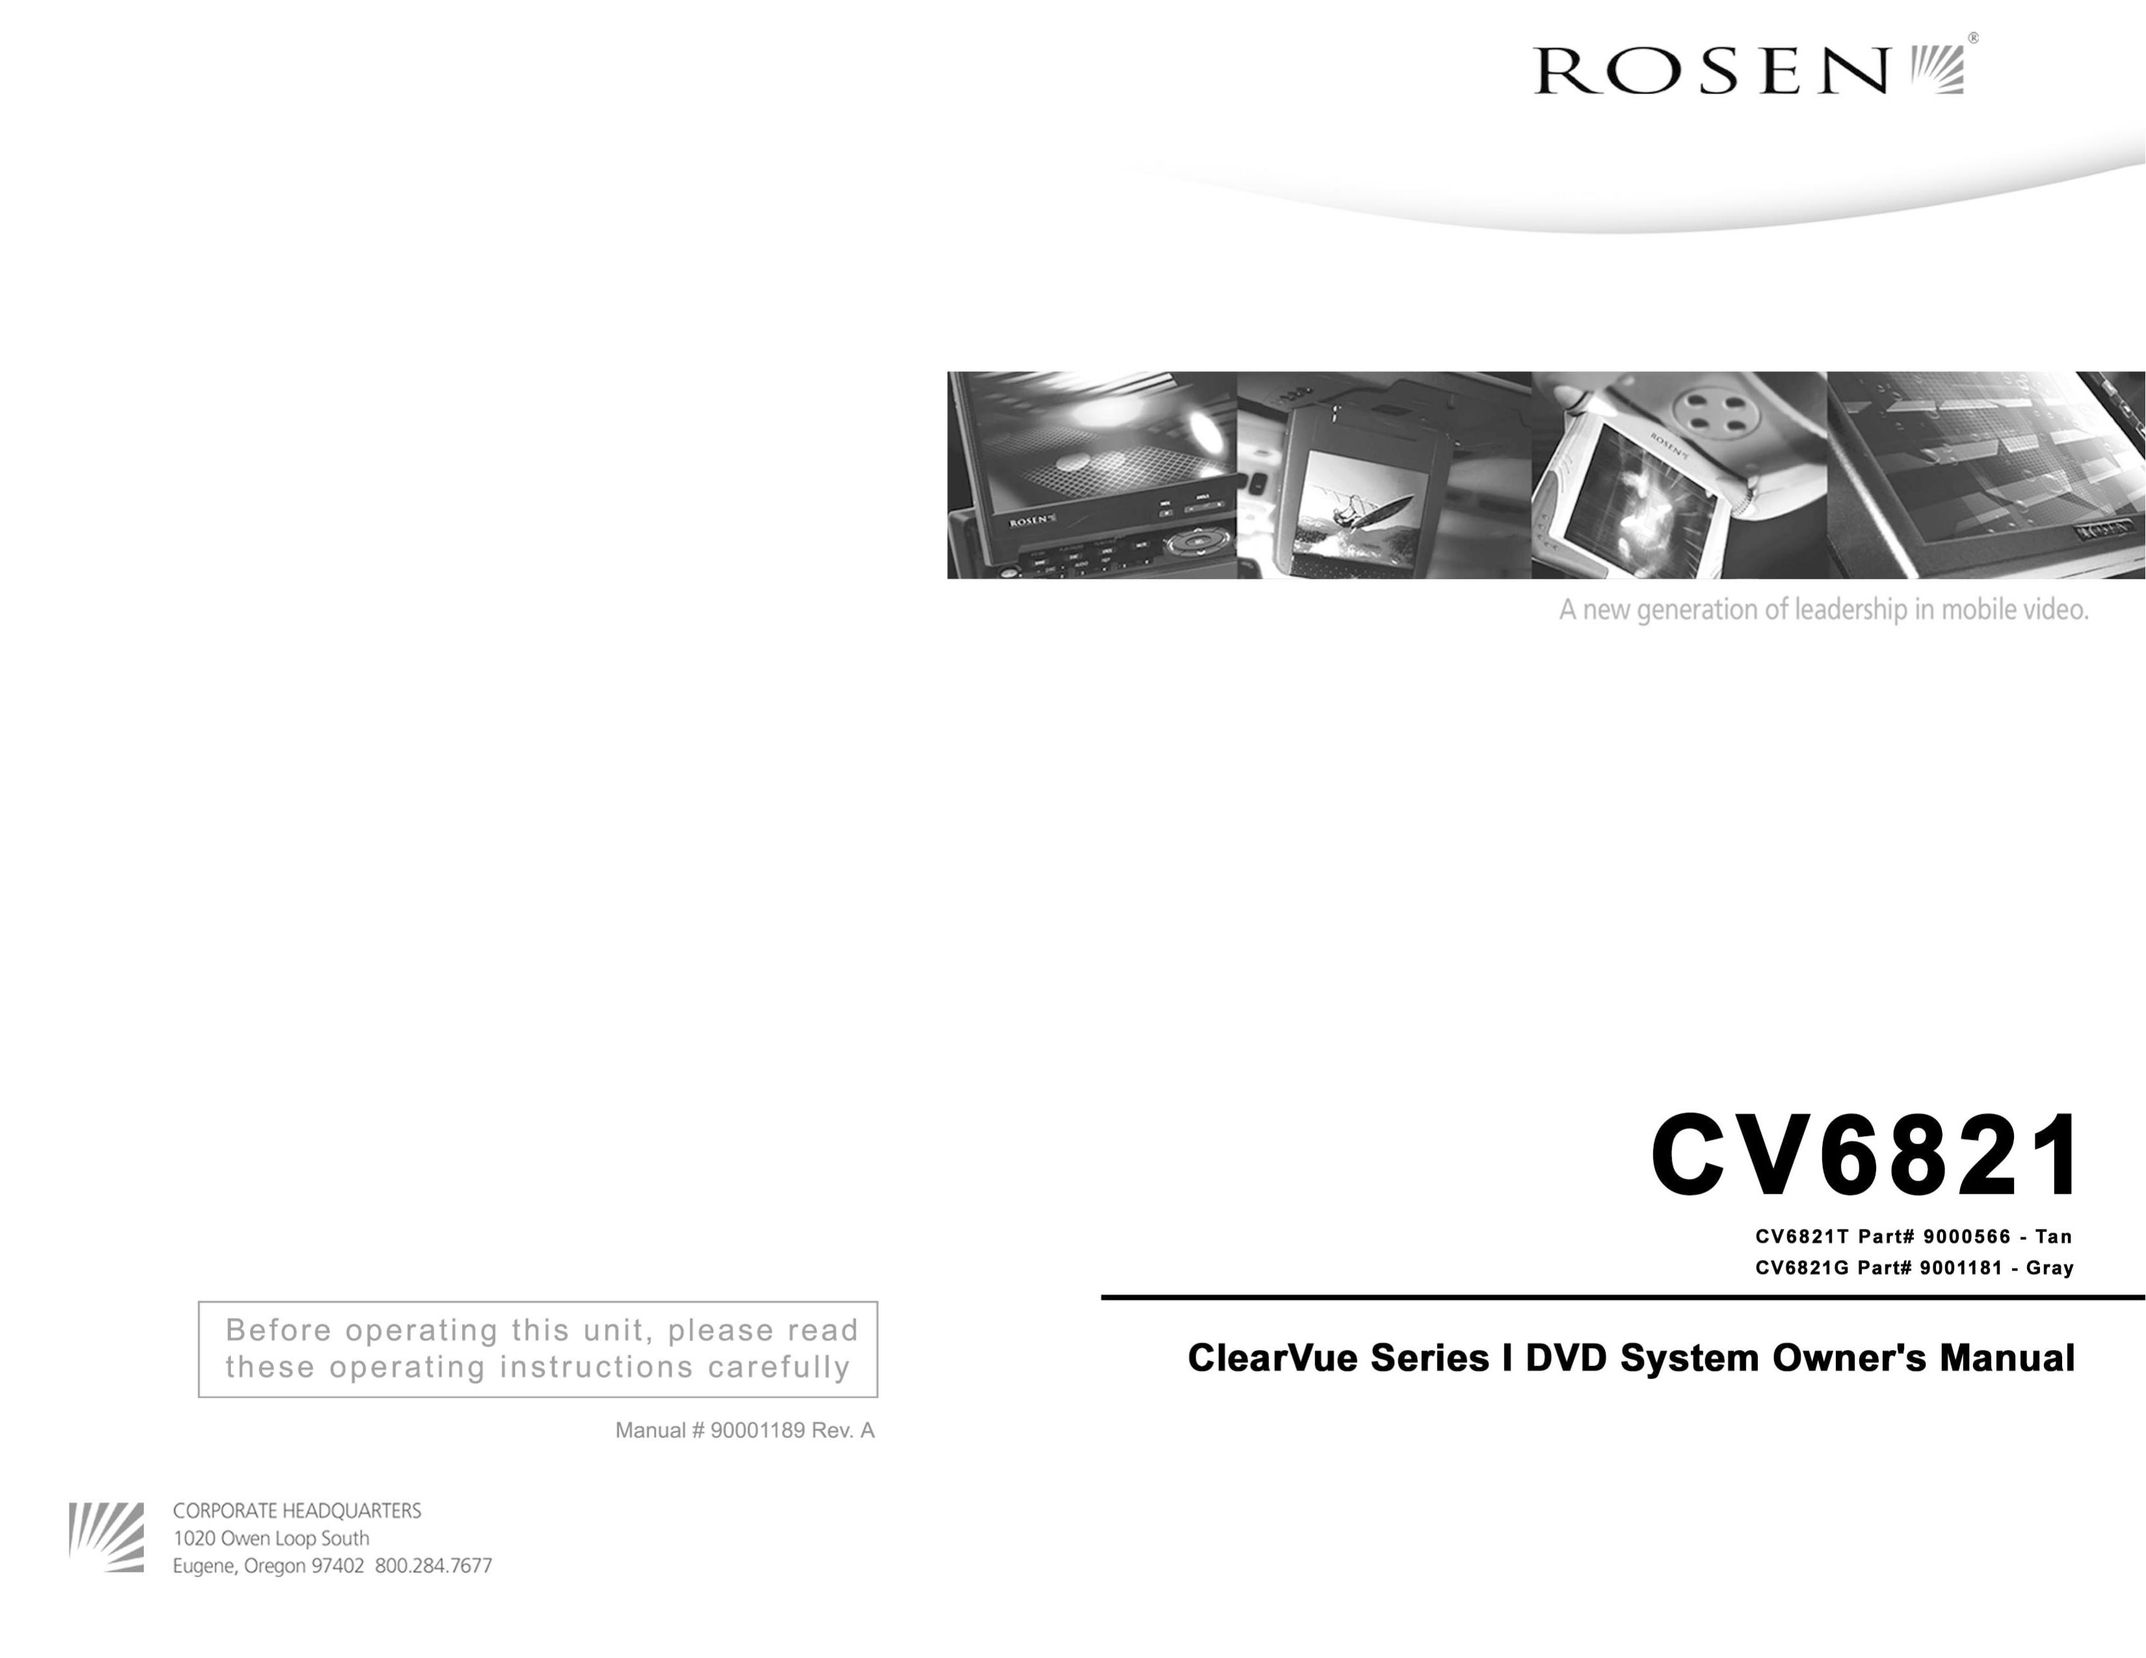 Rosen Entertainment Systems CV6821 DVD Player User Manual